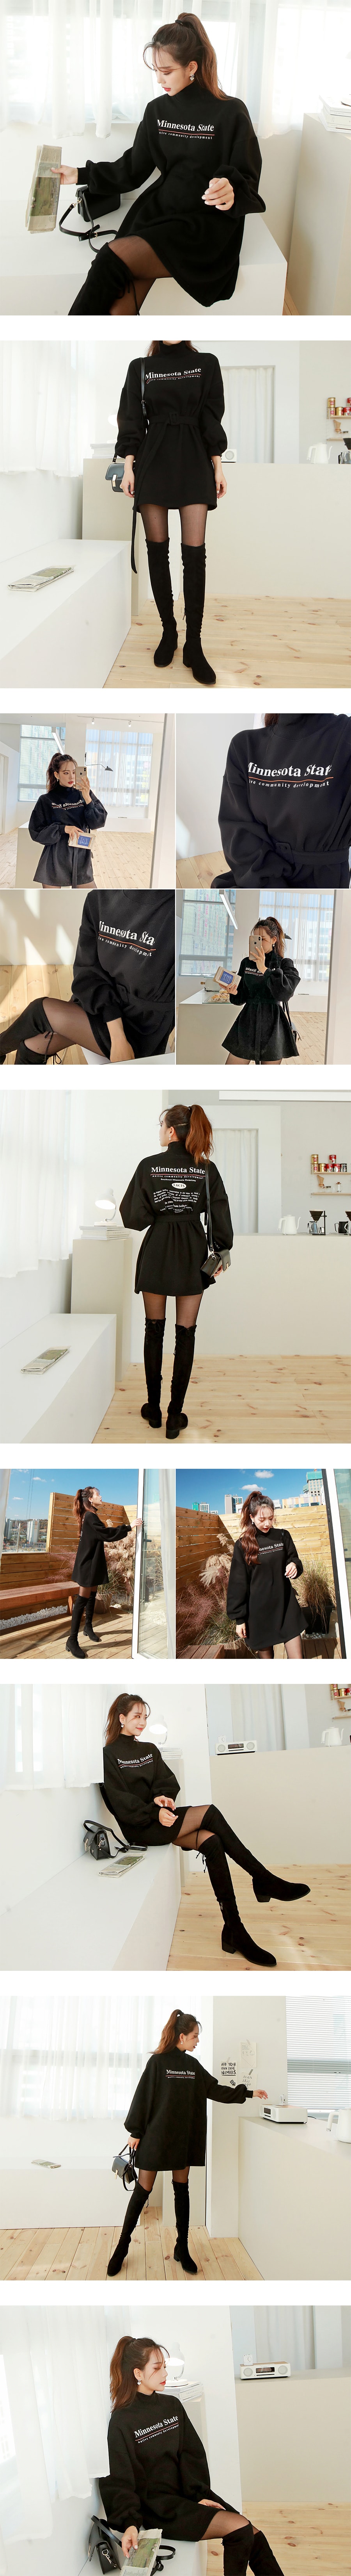 SSUMPART Belted High Neck Mini Dress #Black One Size(S-M)